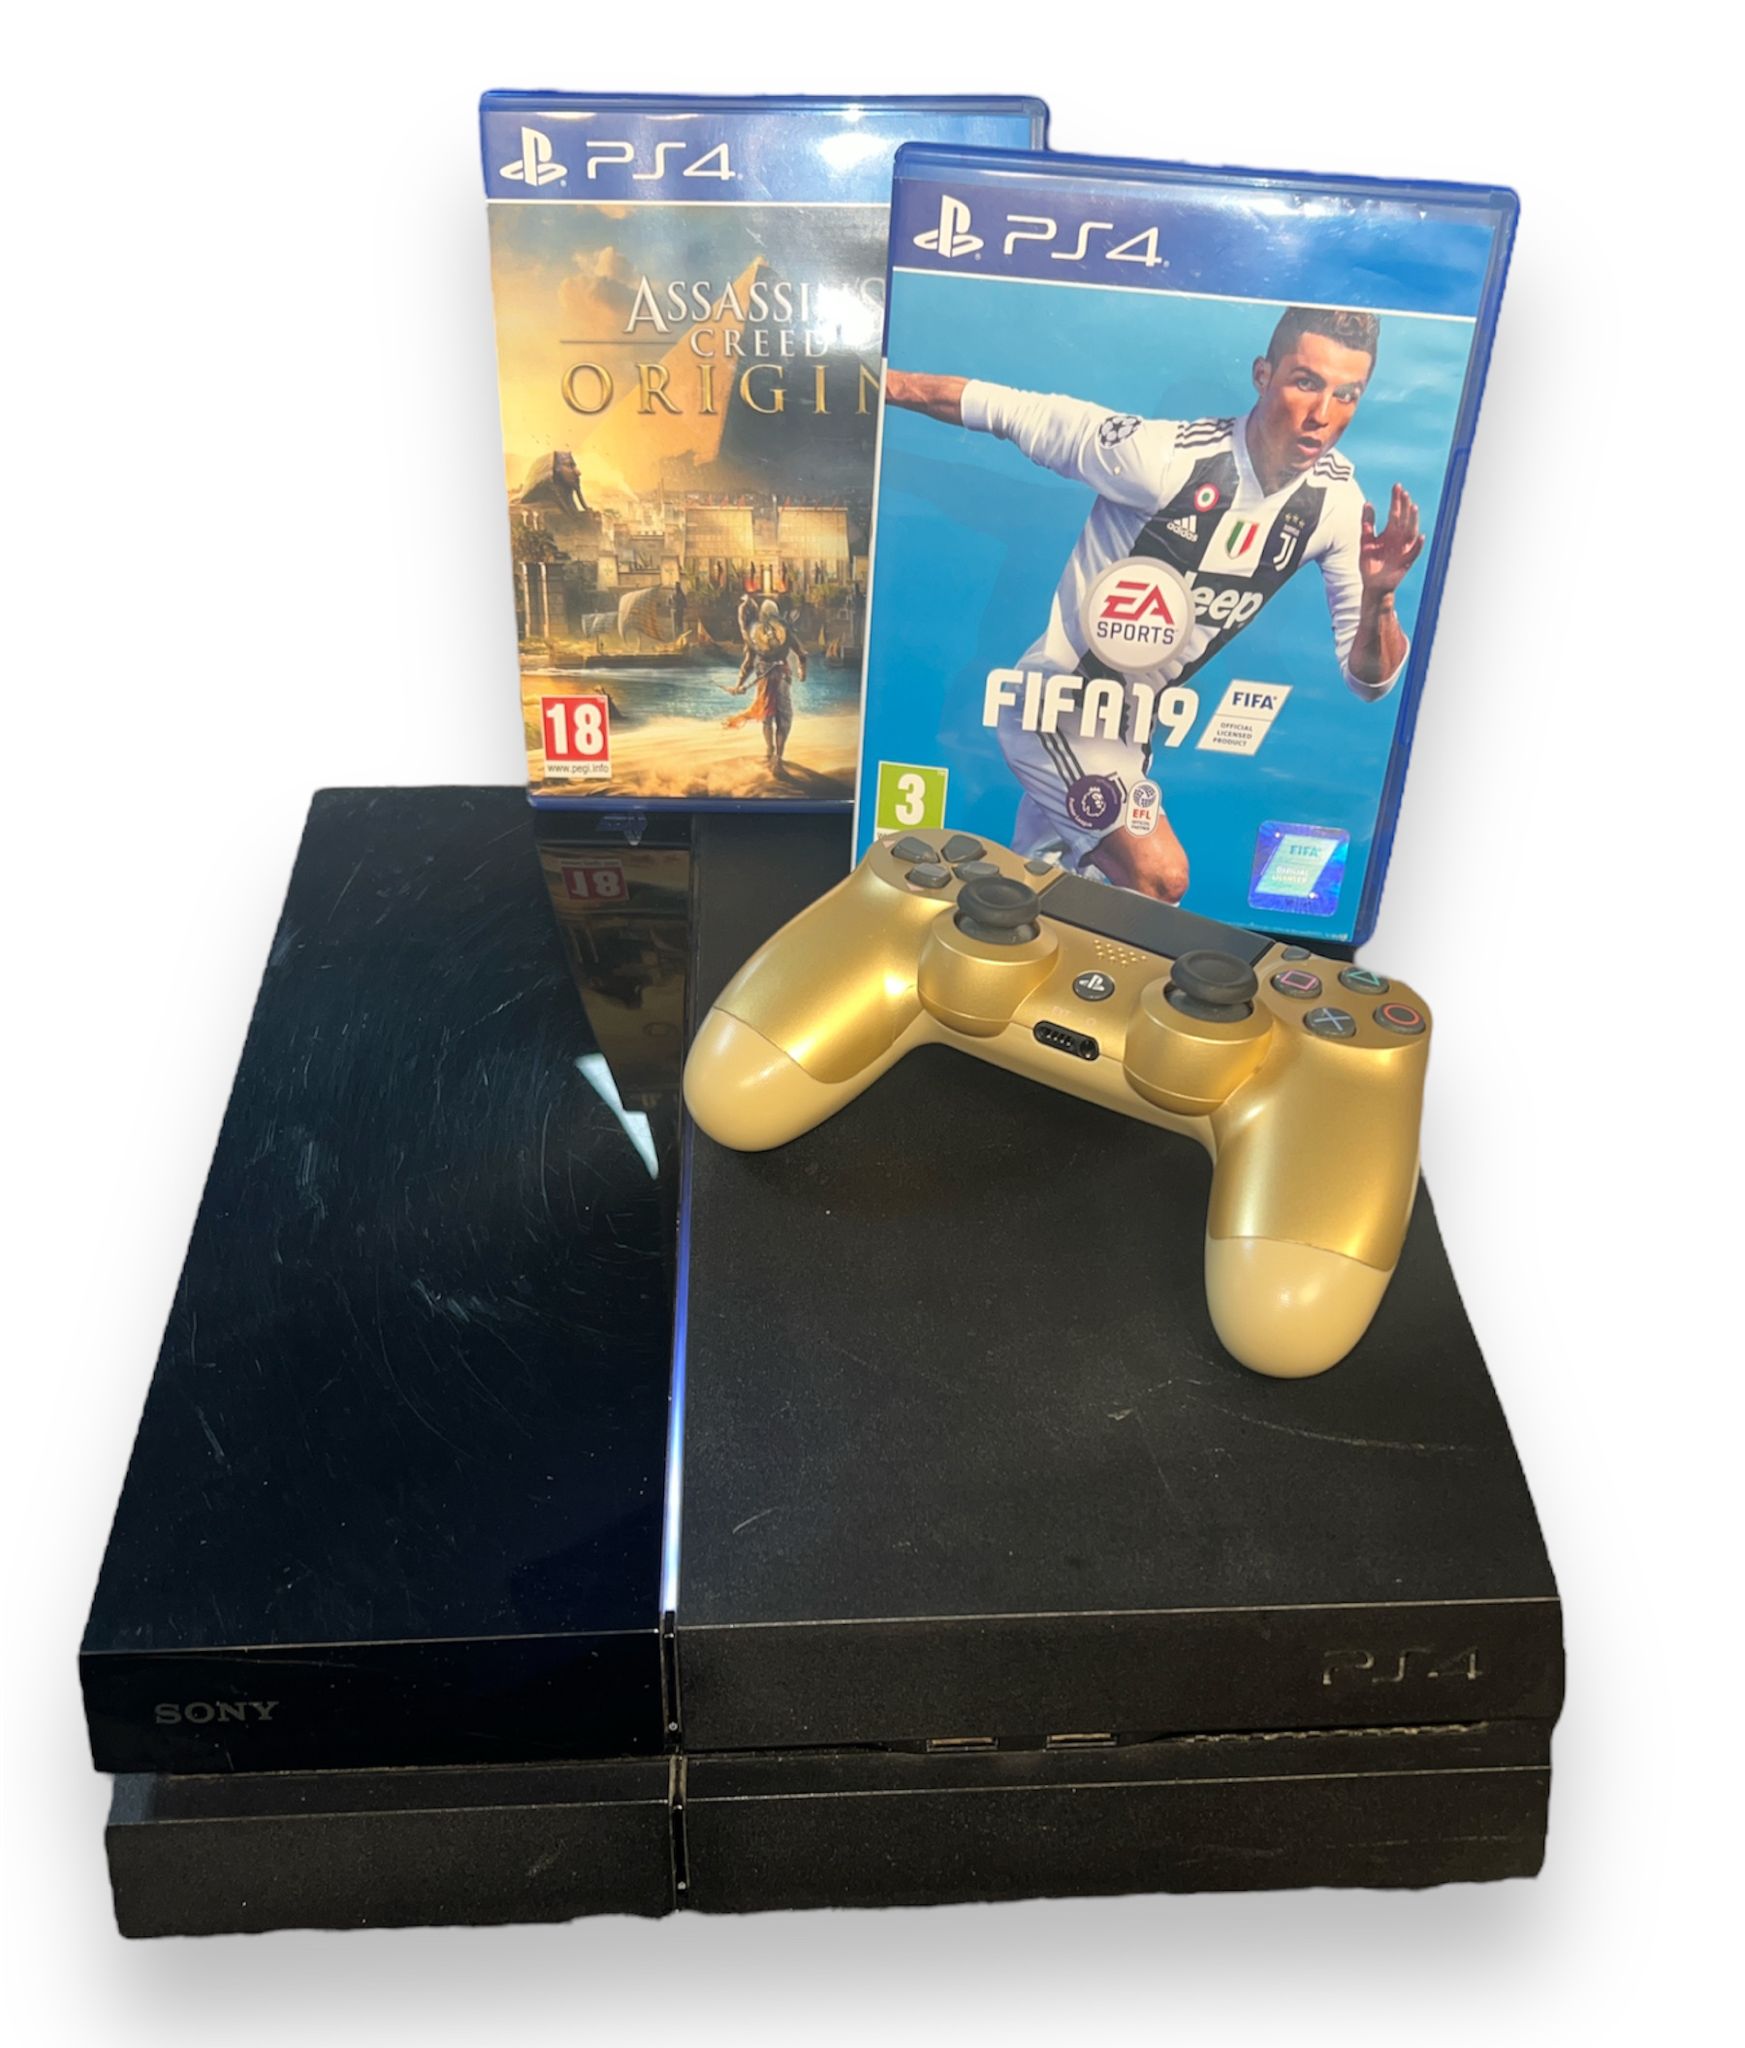 PS4 Original 500gb bundle w Assasins Creed and Fifa 19